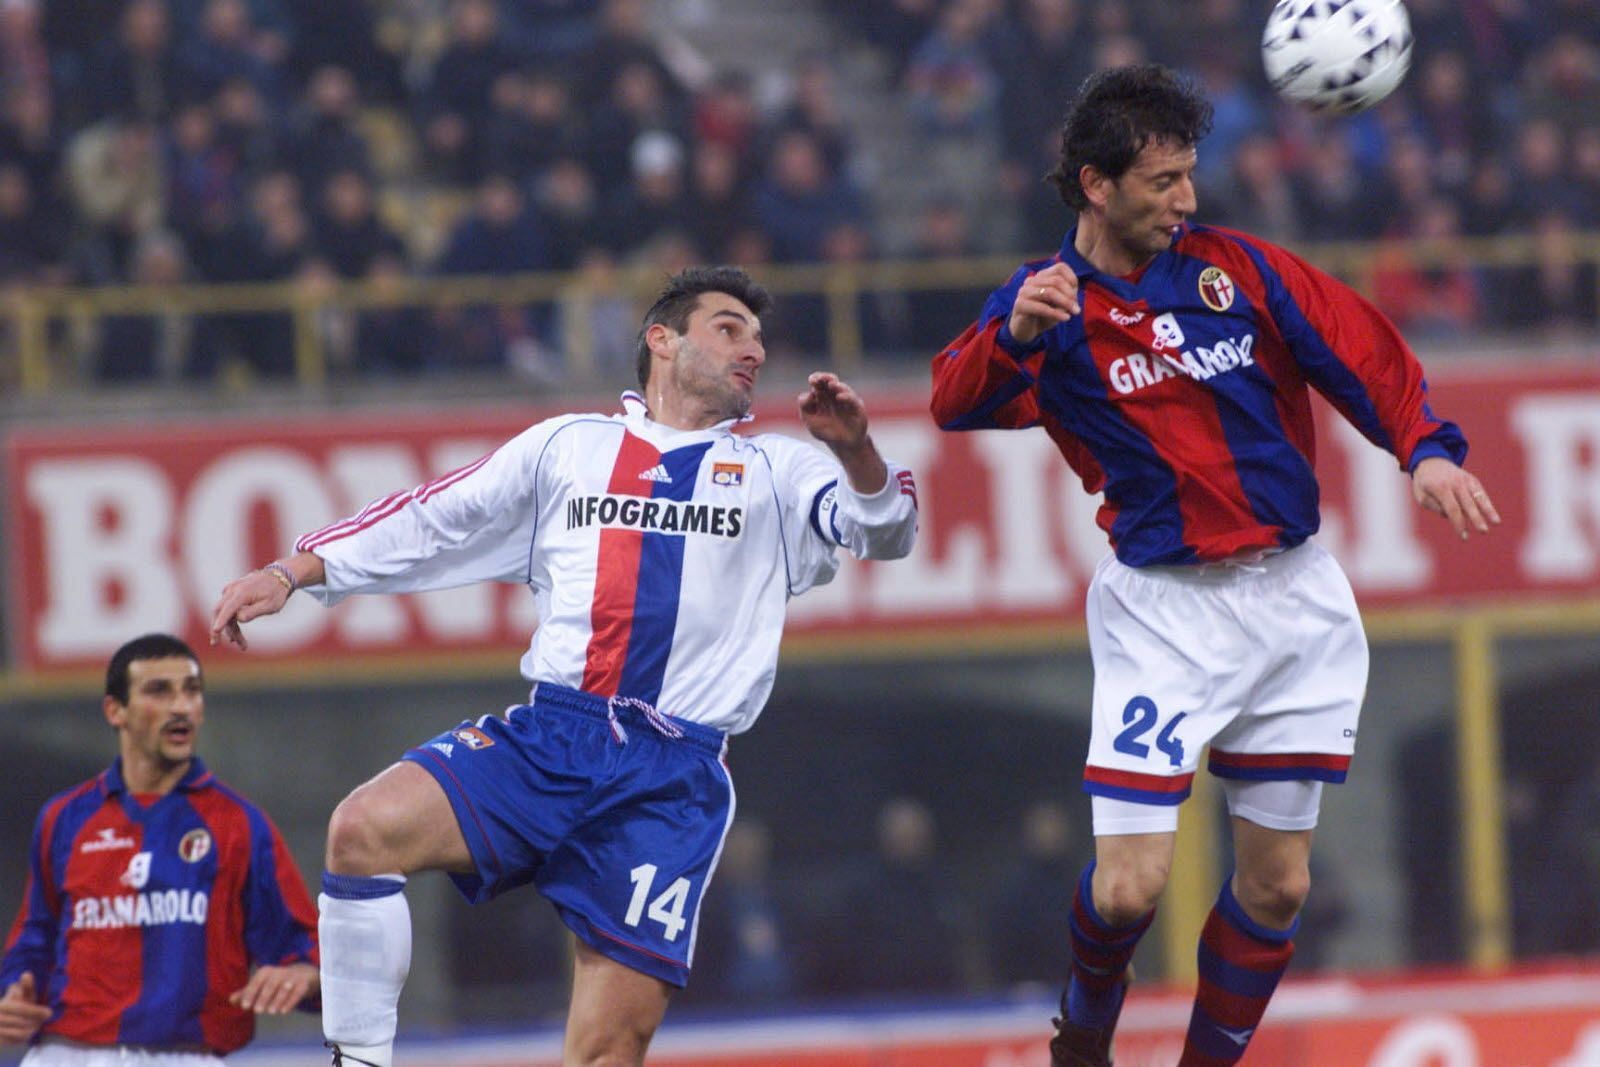 Caveglia (left) in a match against Boulogne (Lyon Mag)